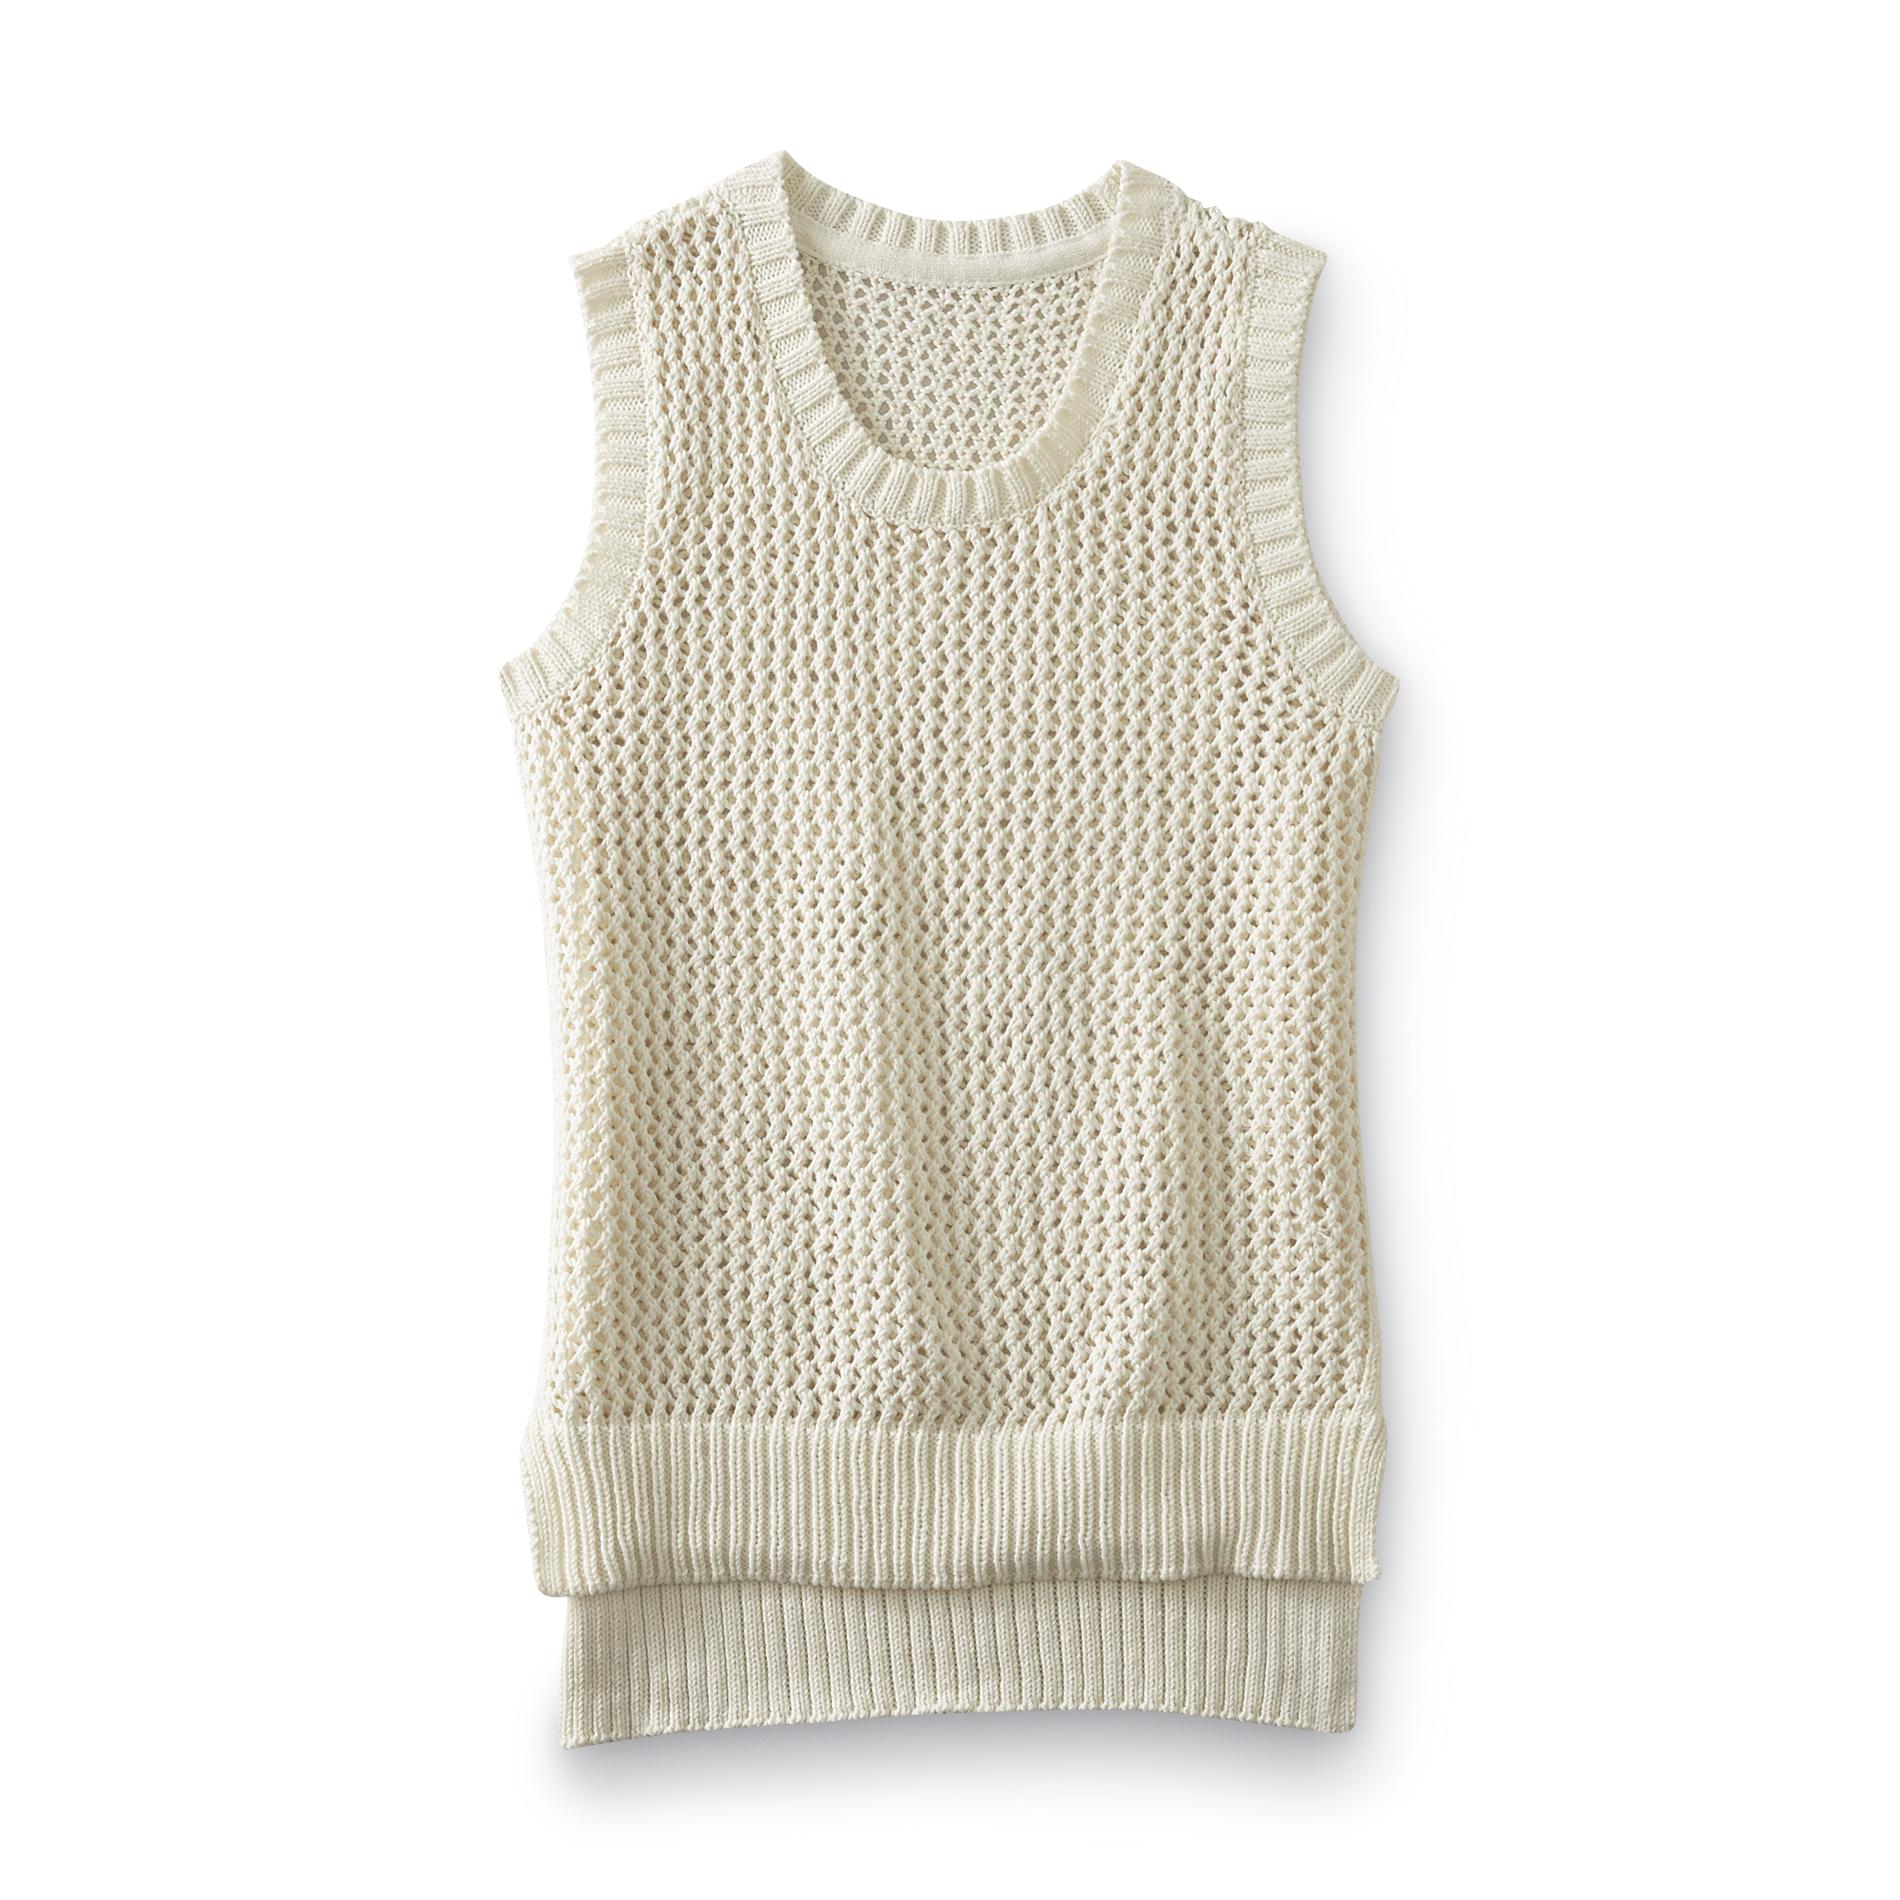 Toughskins Girl's Open-Knit Sweater Vest